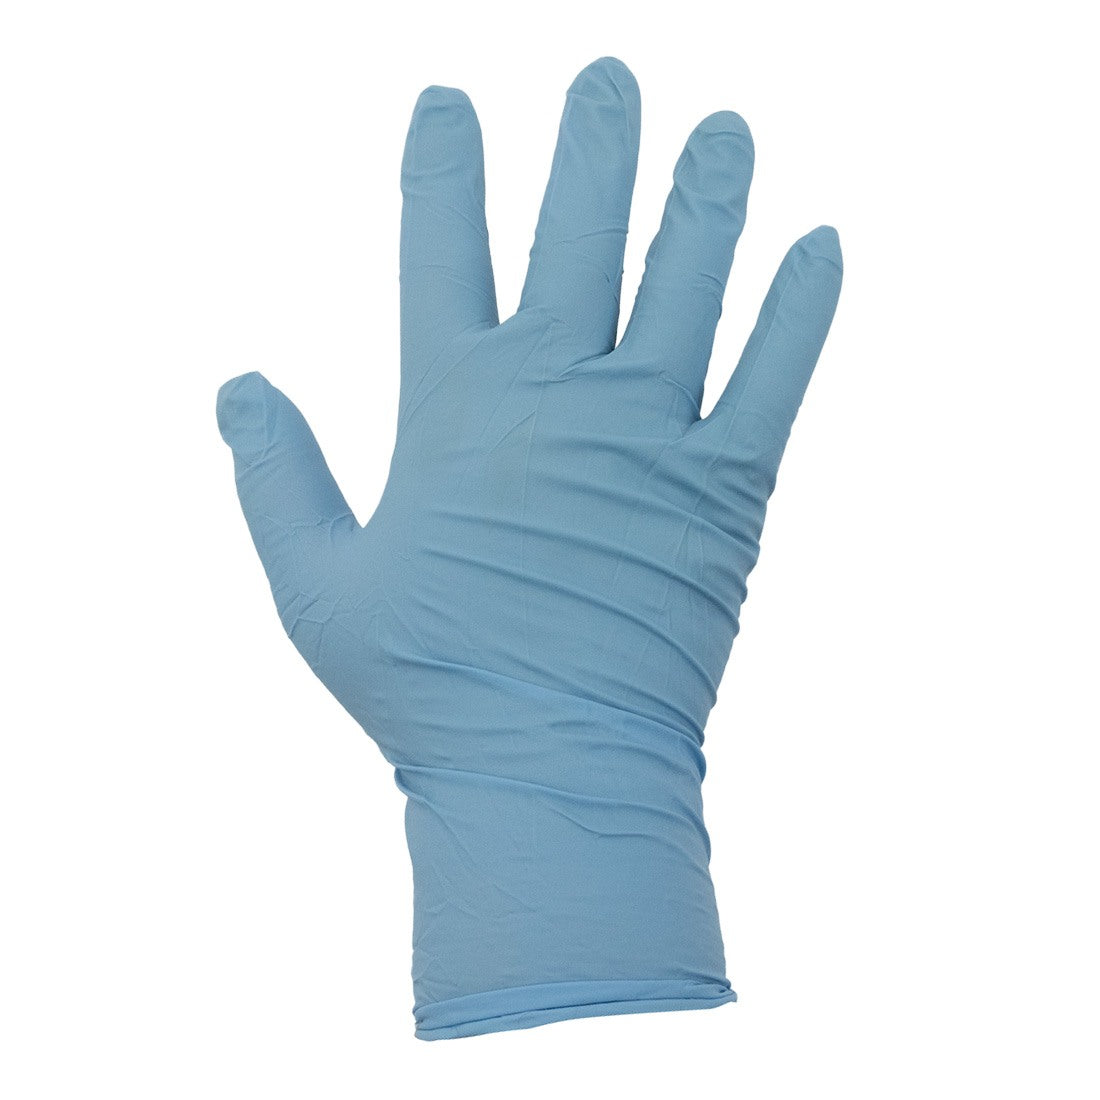 Tronex 9662 Light Blue Extra-Thick Nitrile Exam Glove - XL Hand View